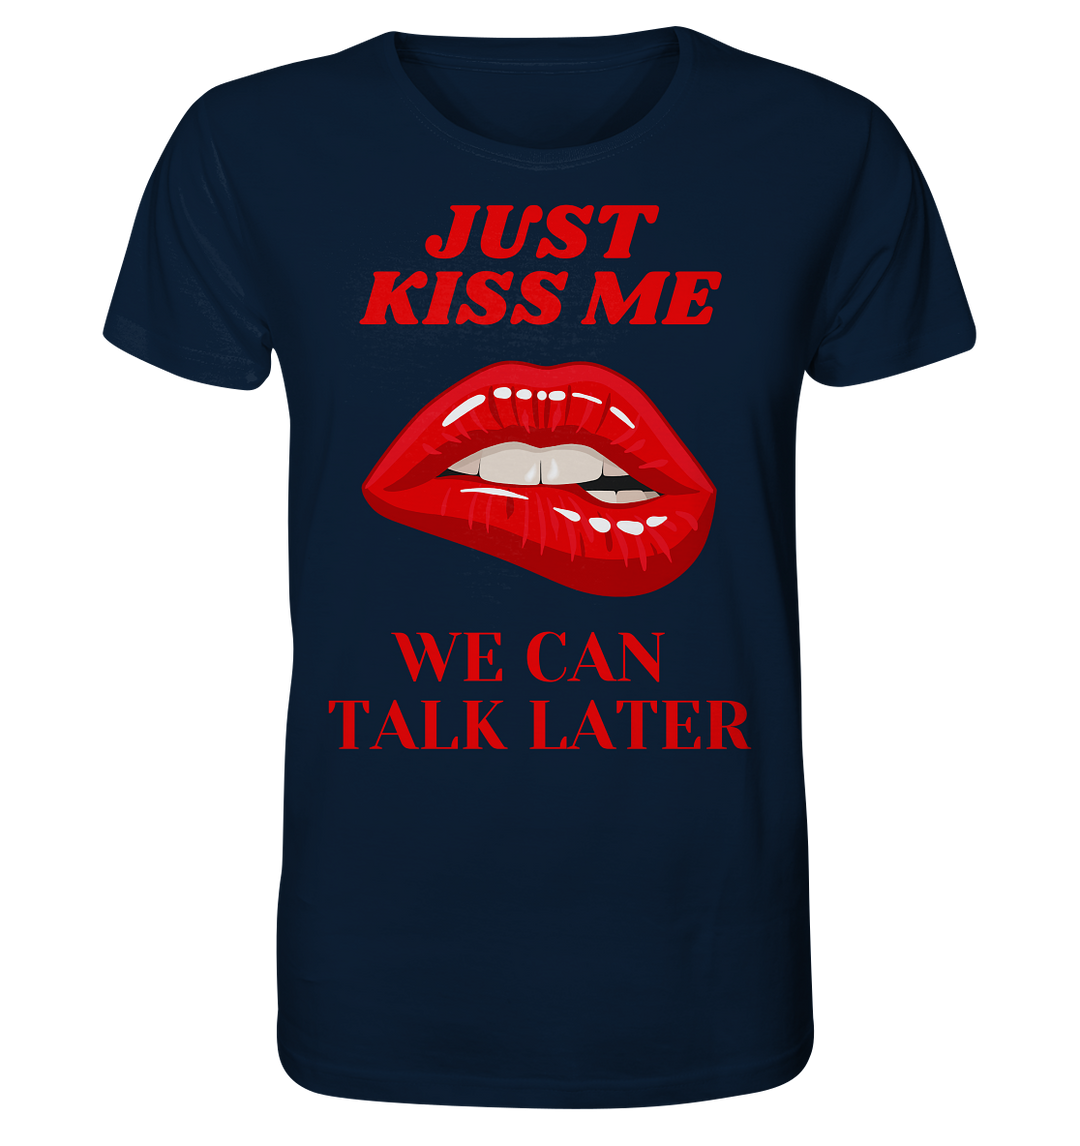 Just Kiss Me We can talk later - Organic Shirt